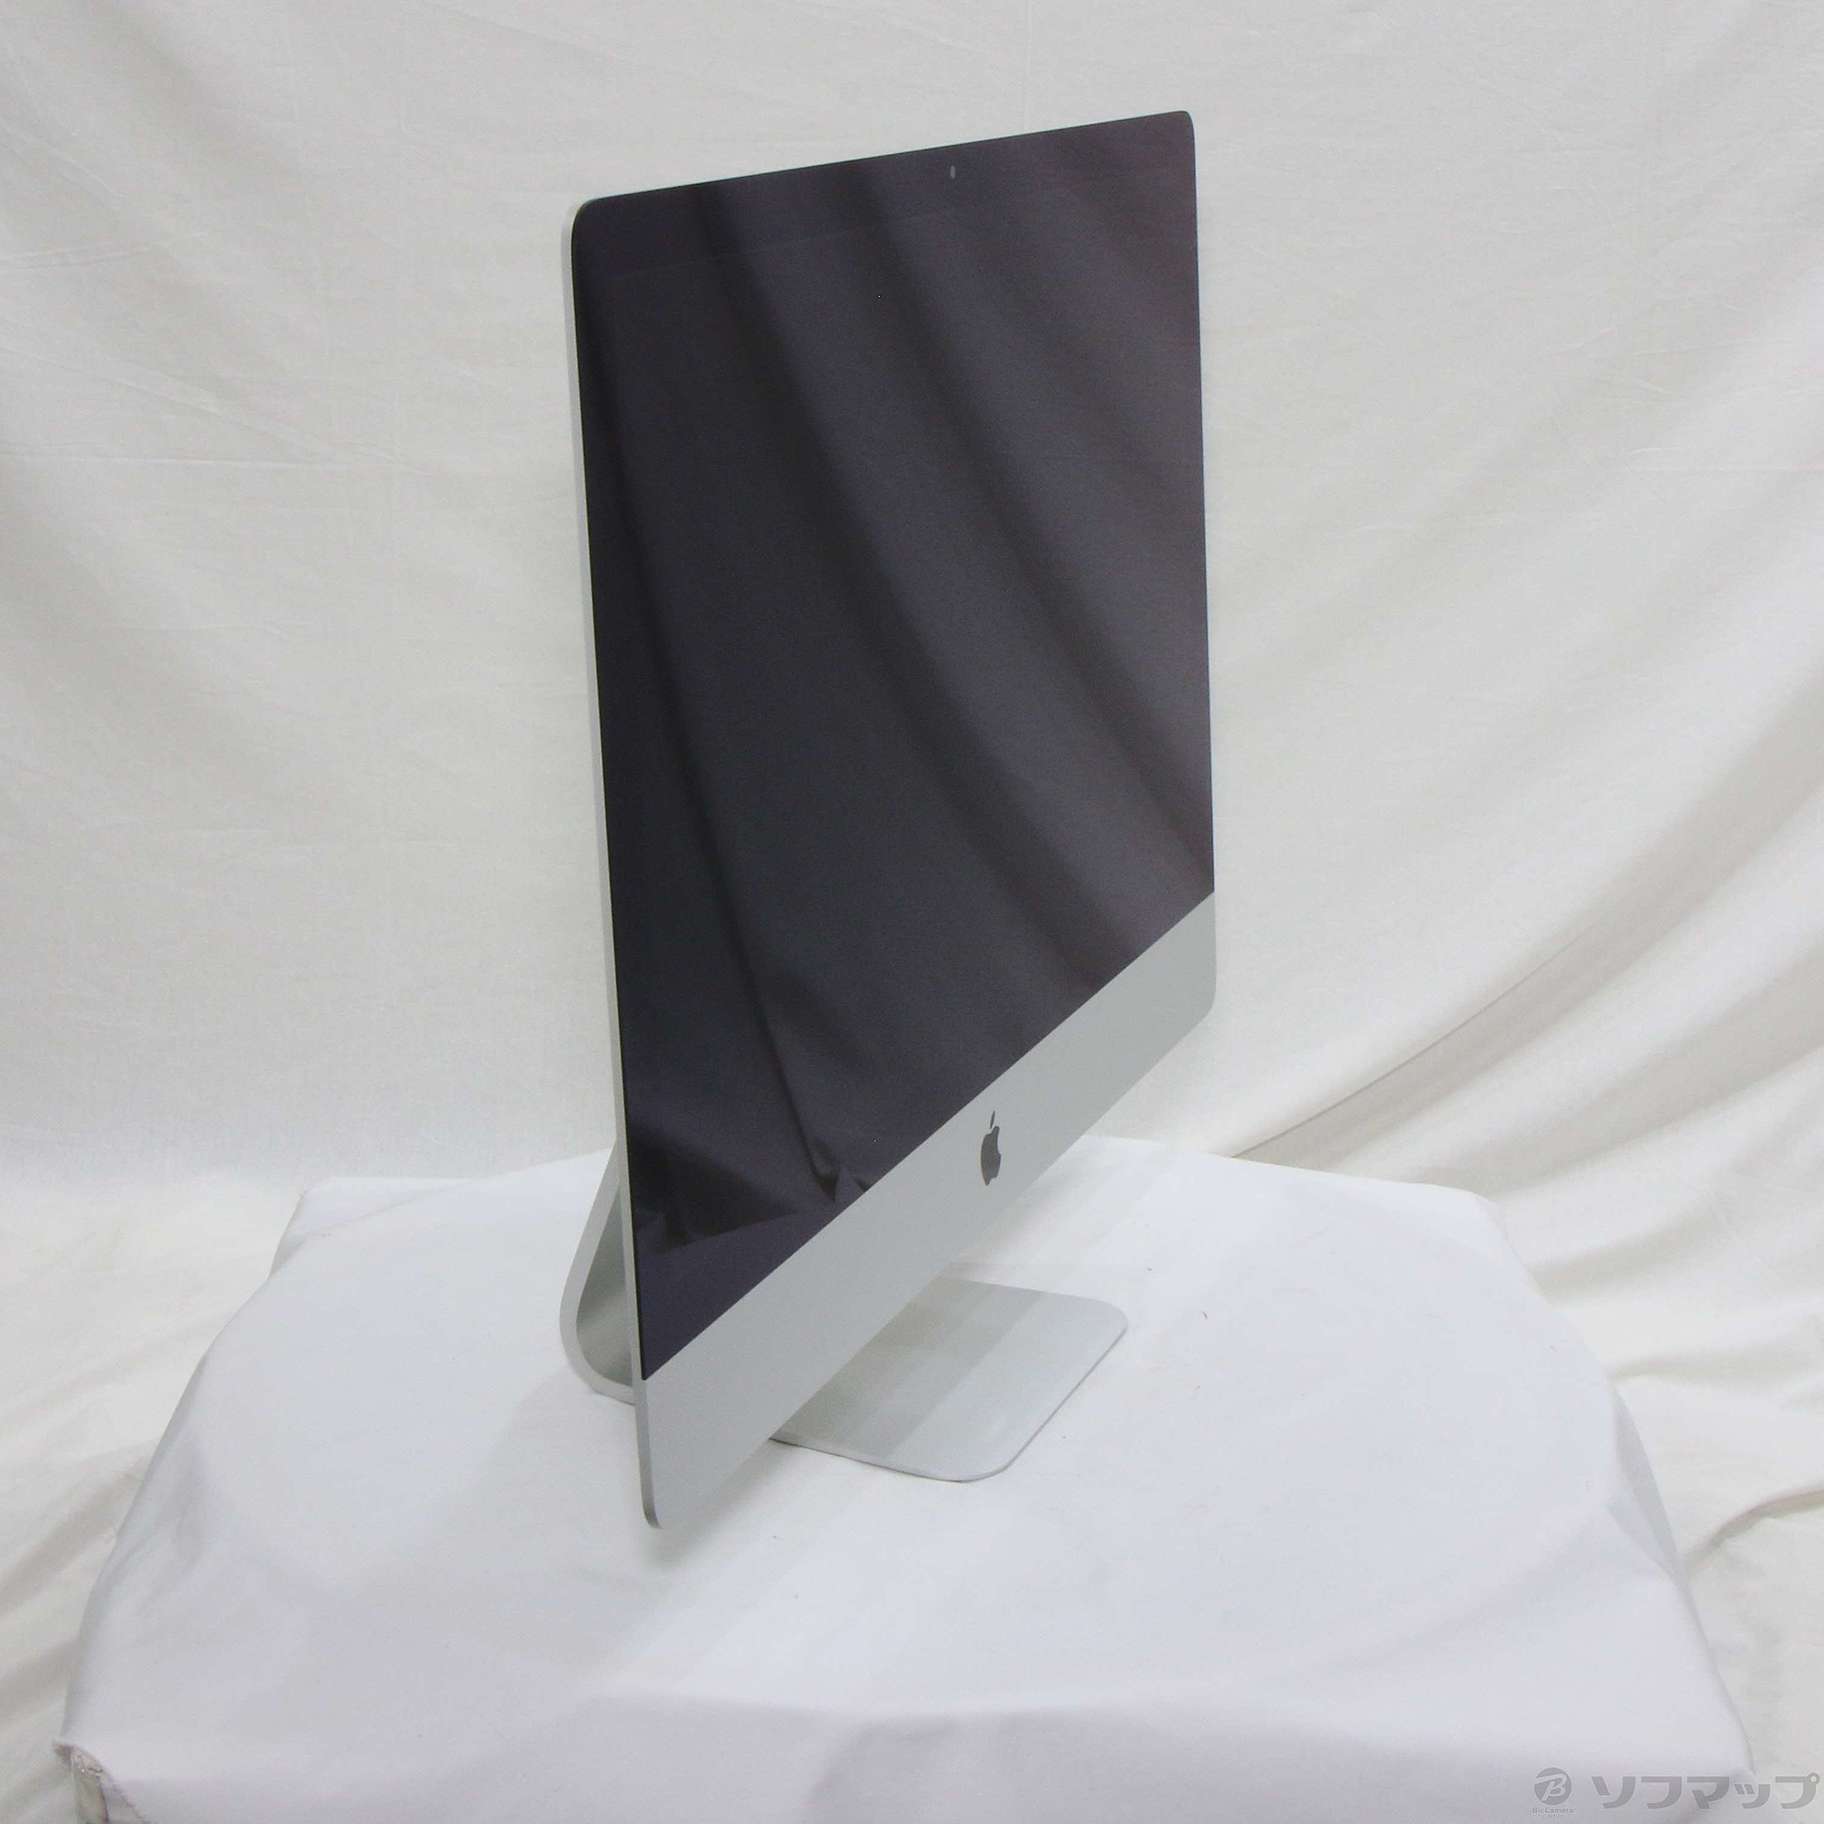 中古】iMac 27-inch Late 2013 MF125J／A Core_i7 3.5GHz 32GB